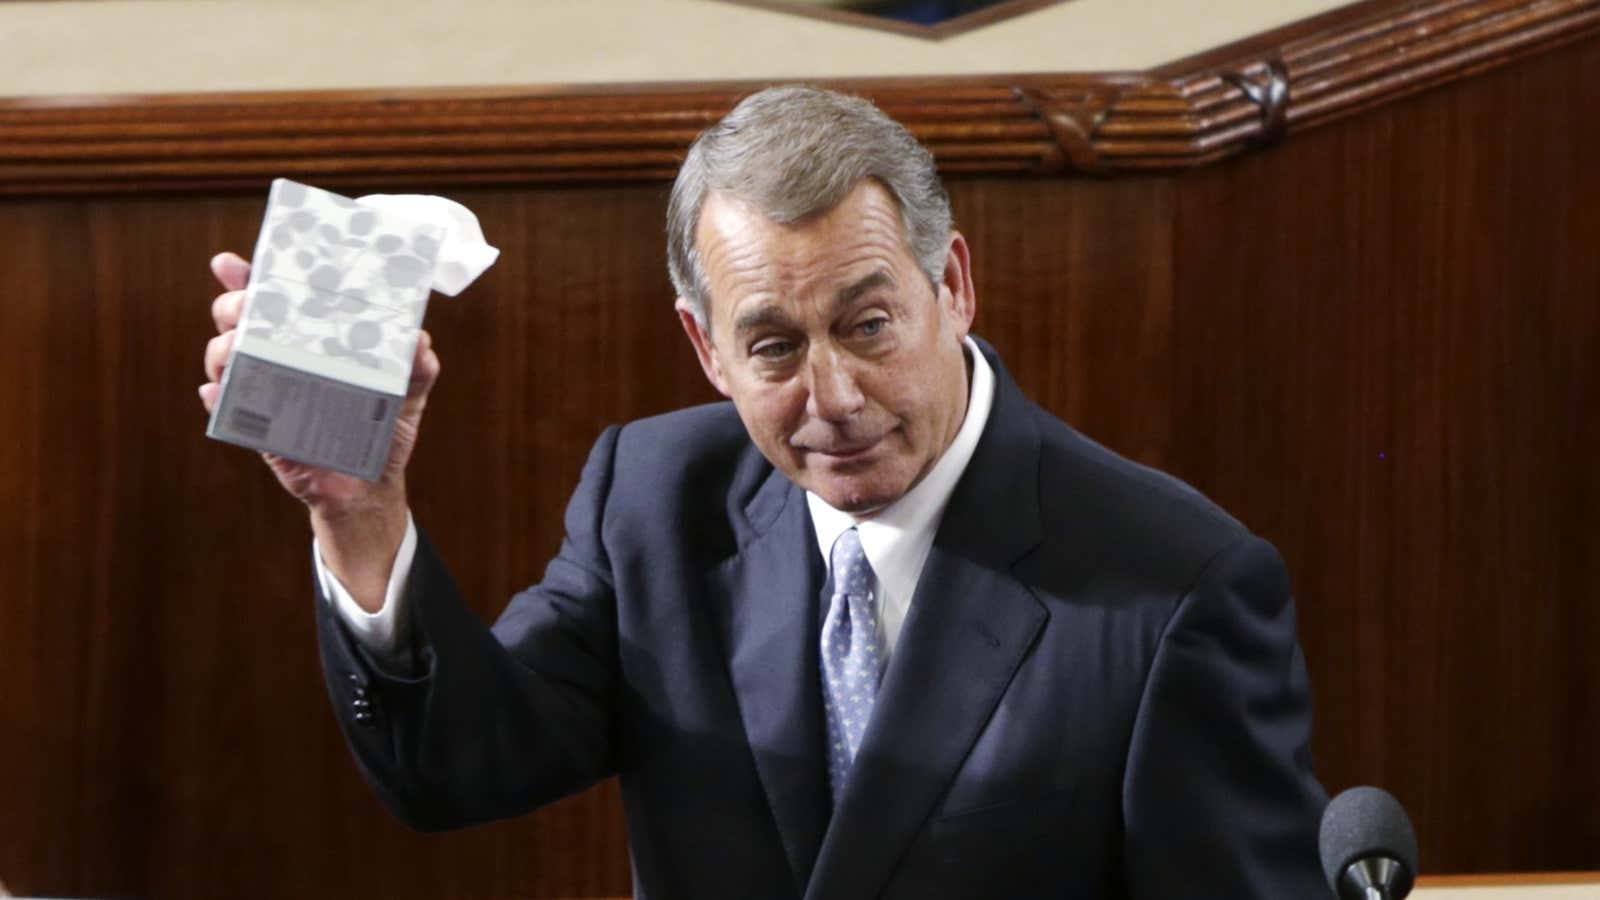 The way Congress dresses makes John Boehner sad.